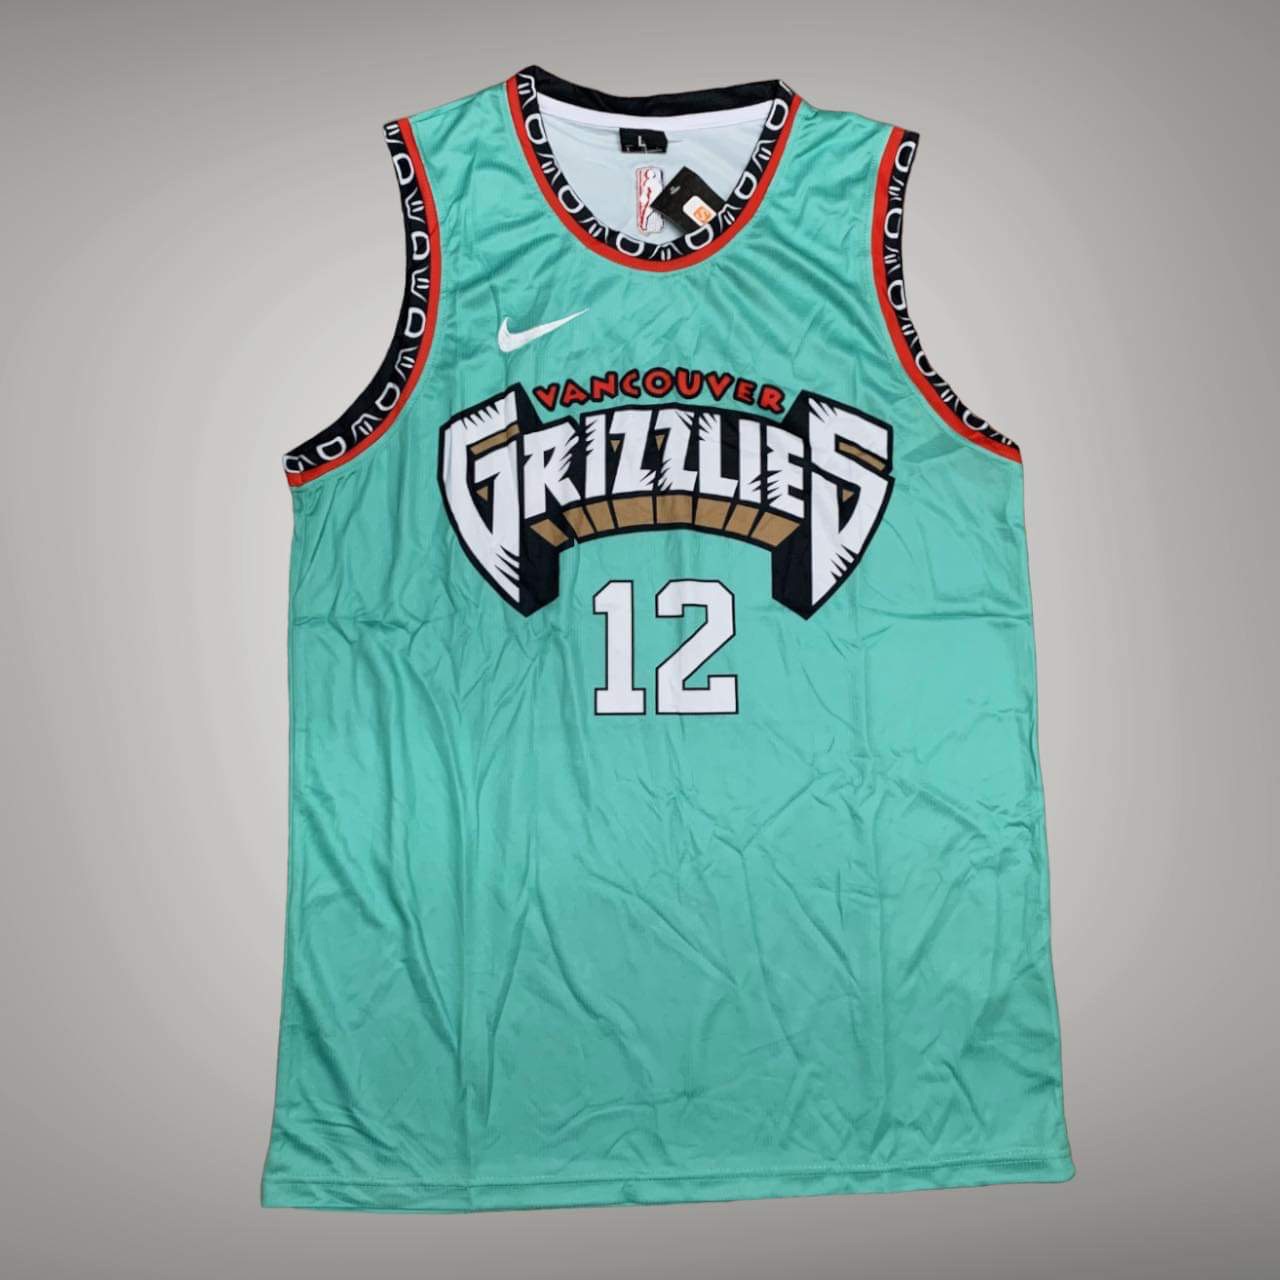 Grizzlies sando basketball jerseys high quality subli